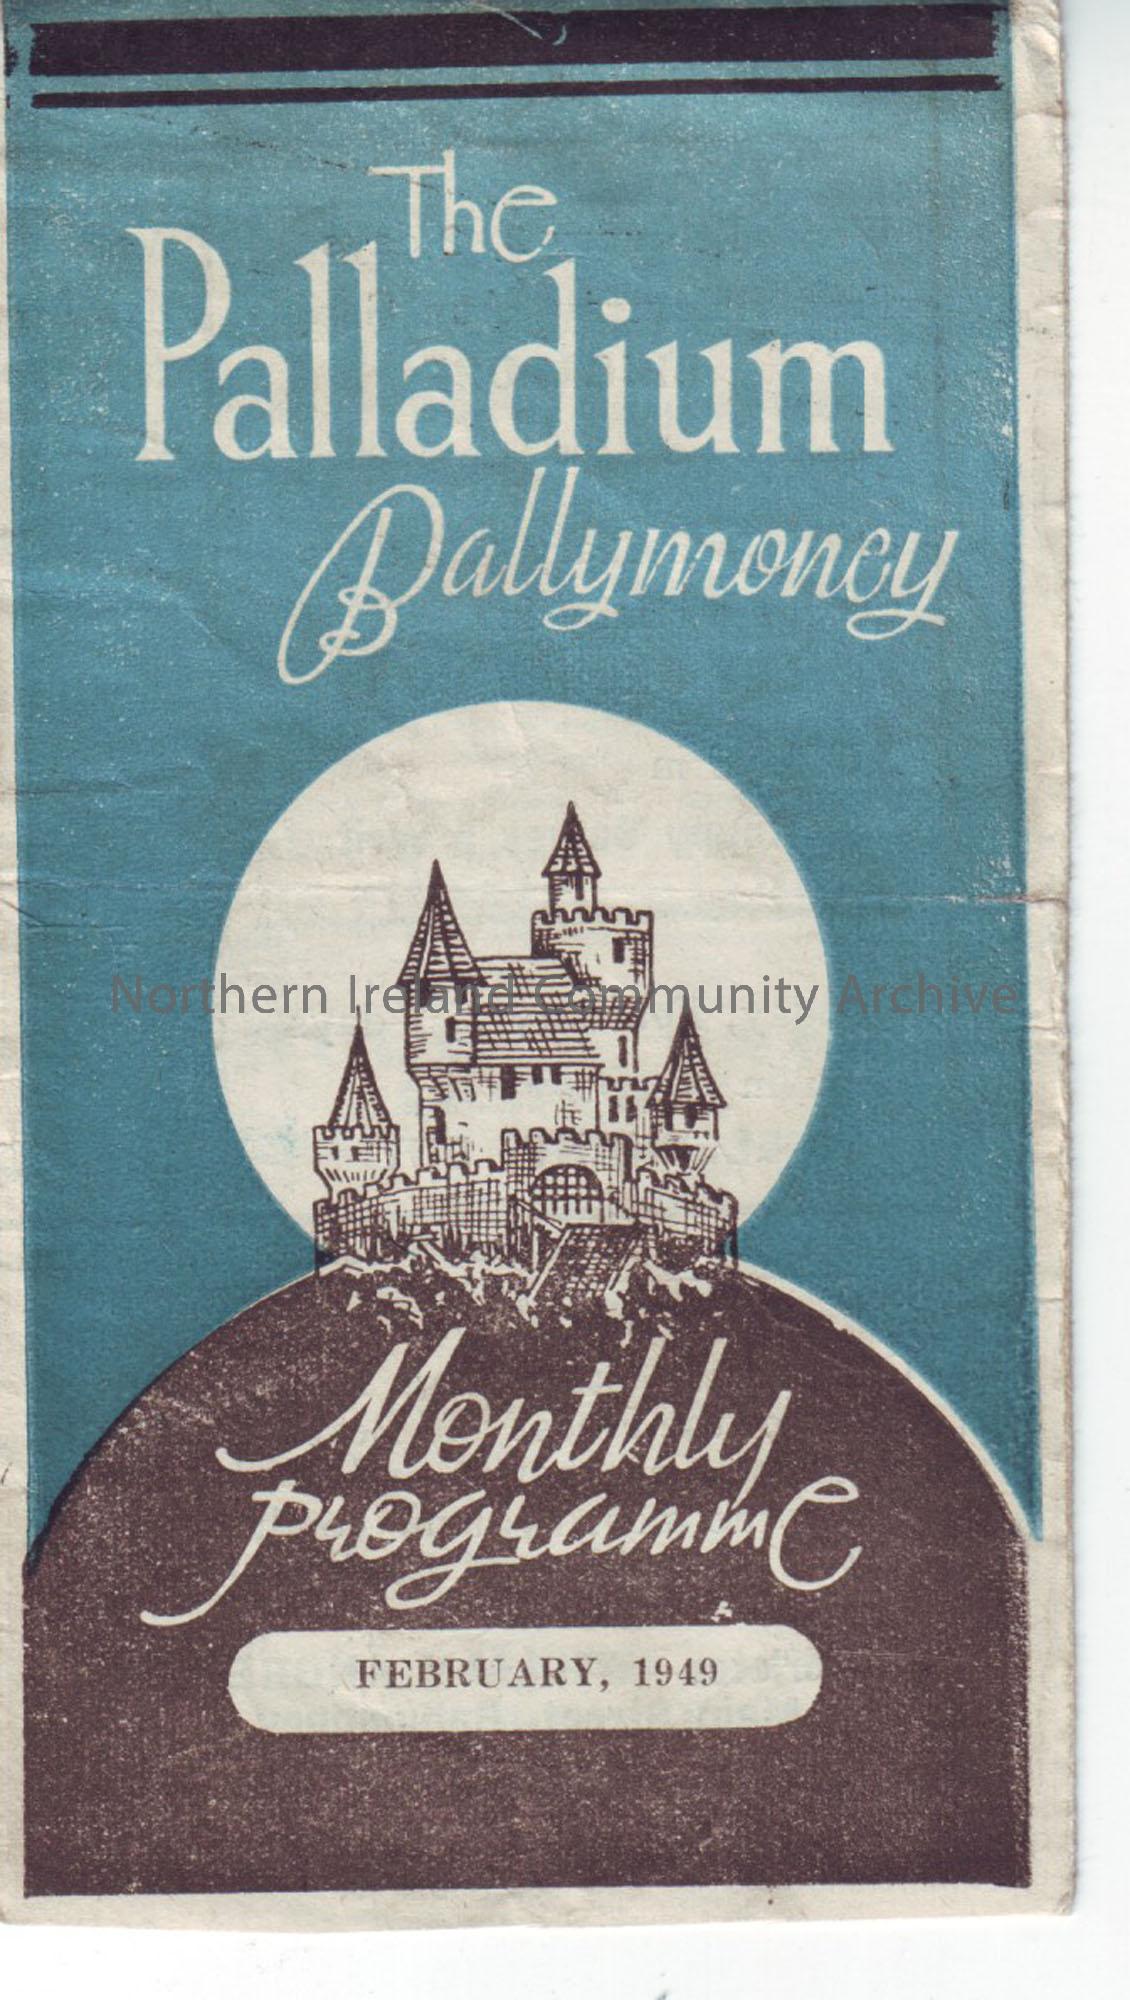 blue monthly programme for Ballymoney Palladium cinema- February 1949